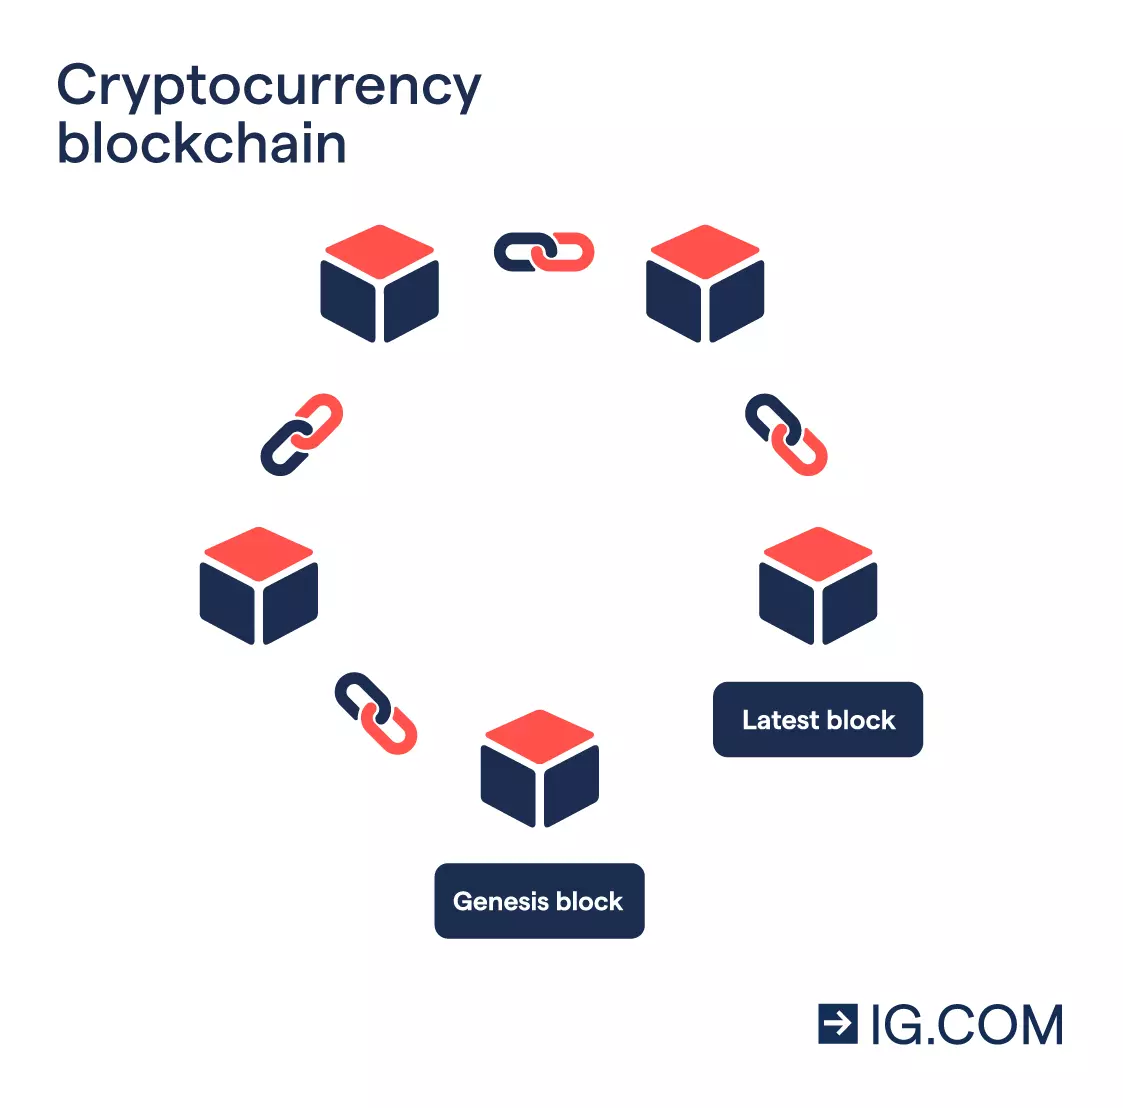 Cryptocurrency blockchain image